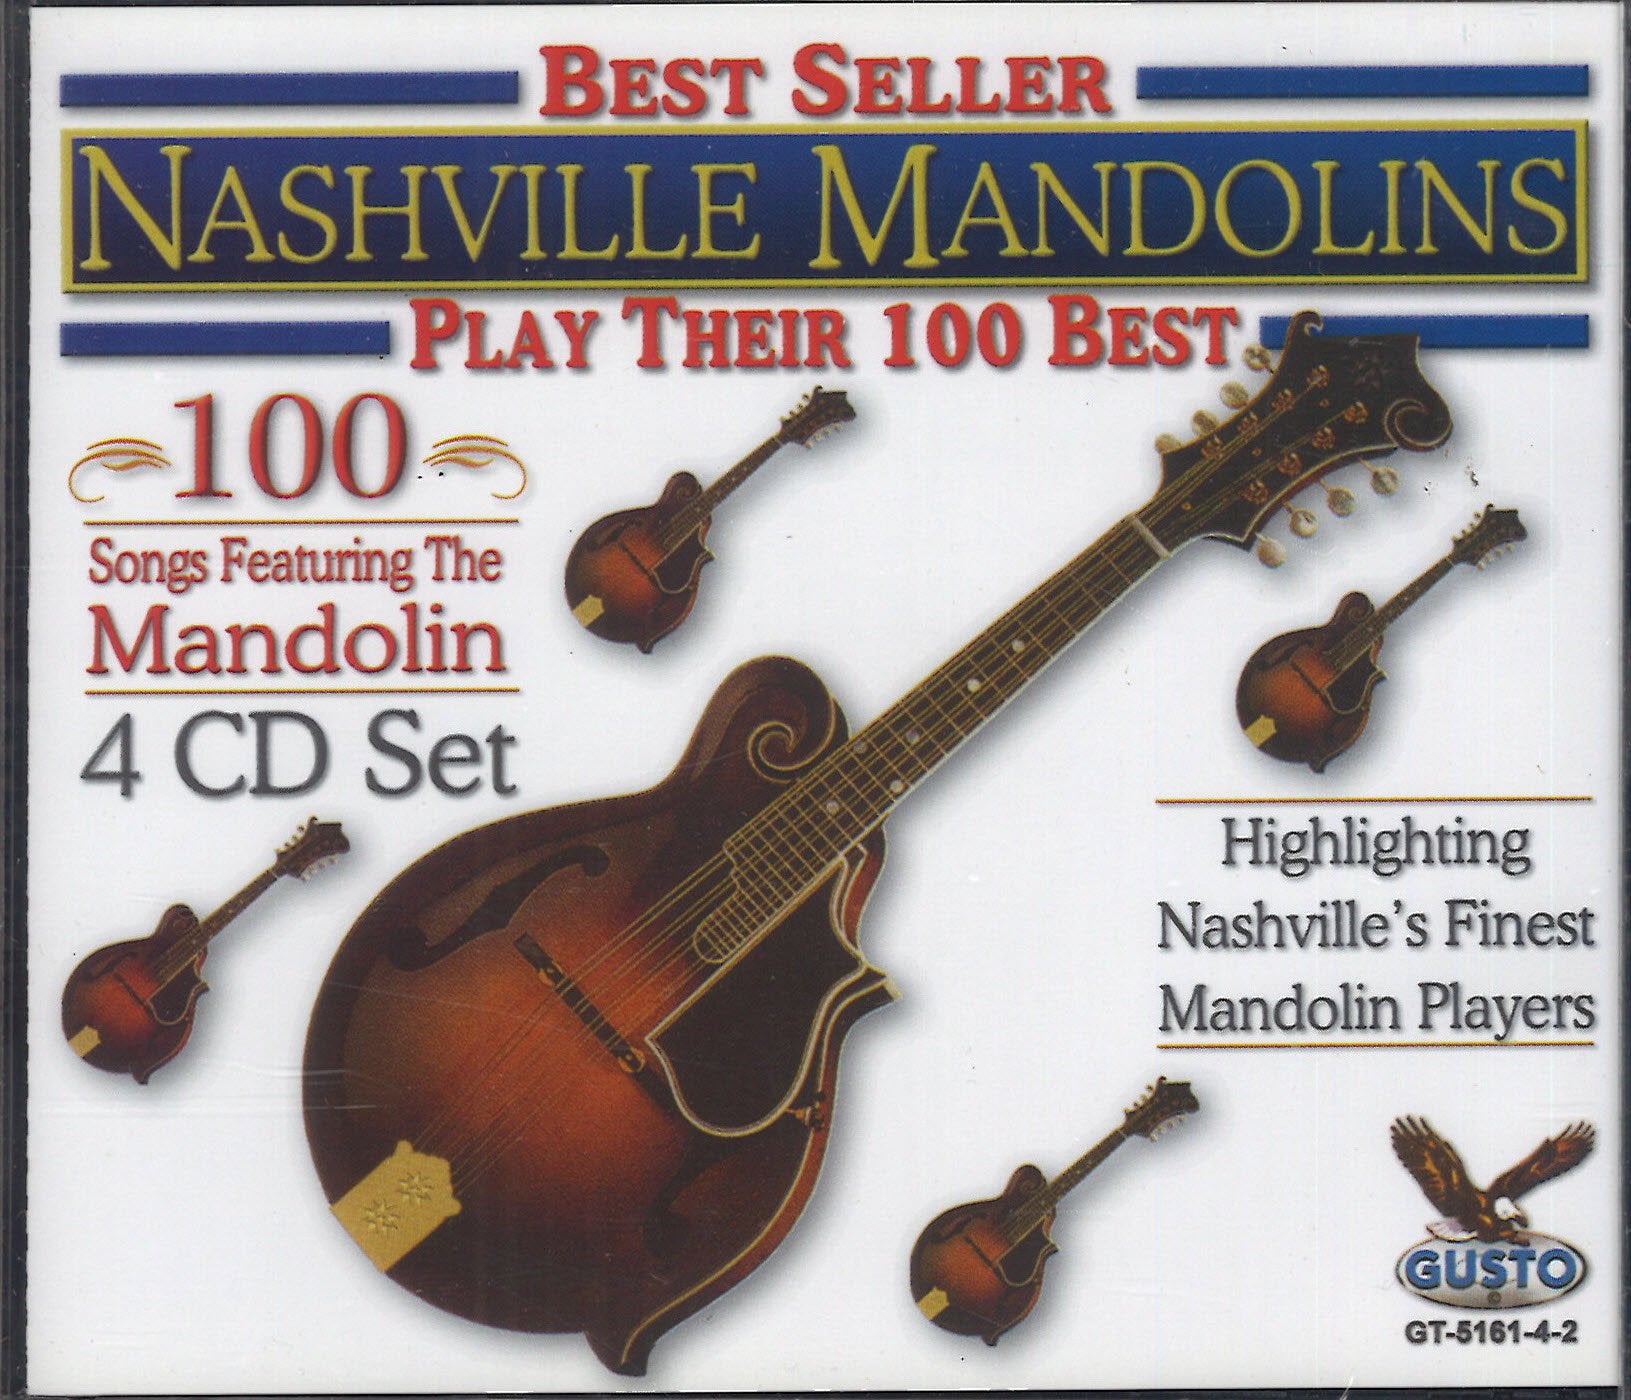 Nashville Mandolin Play Their 100 Best: 4 CD Set